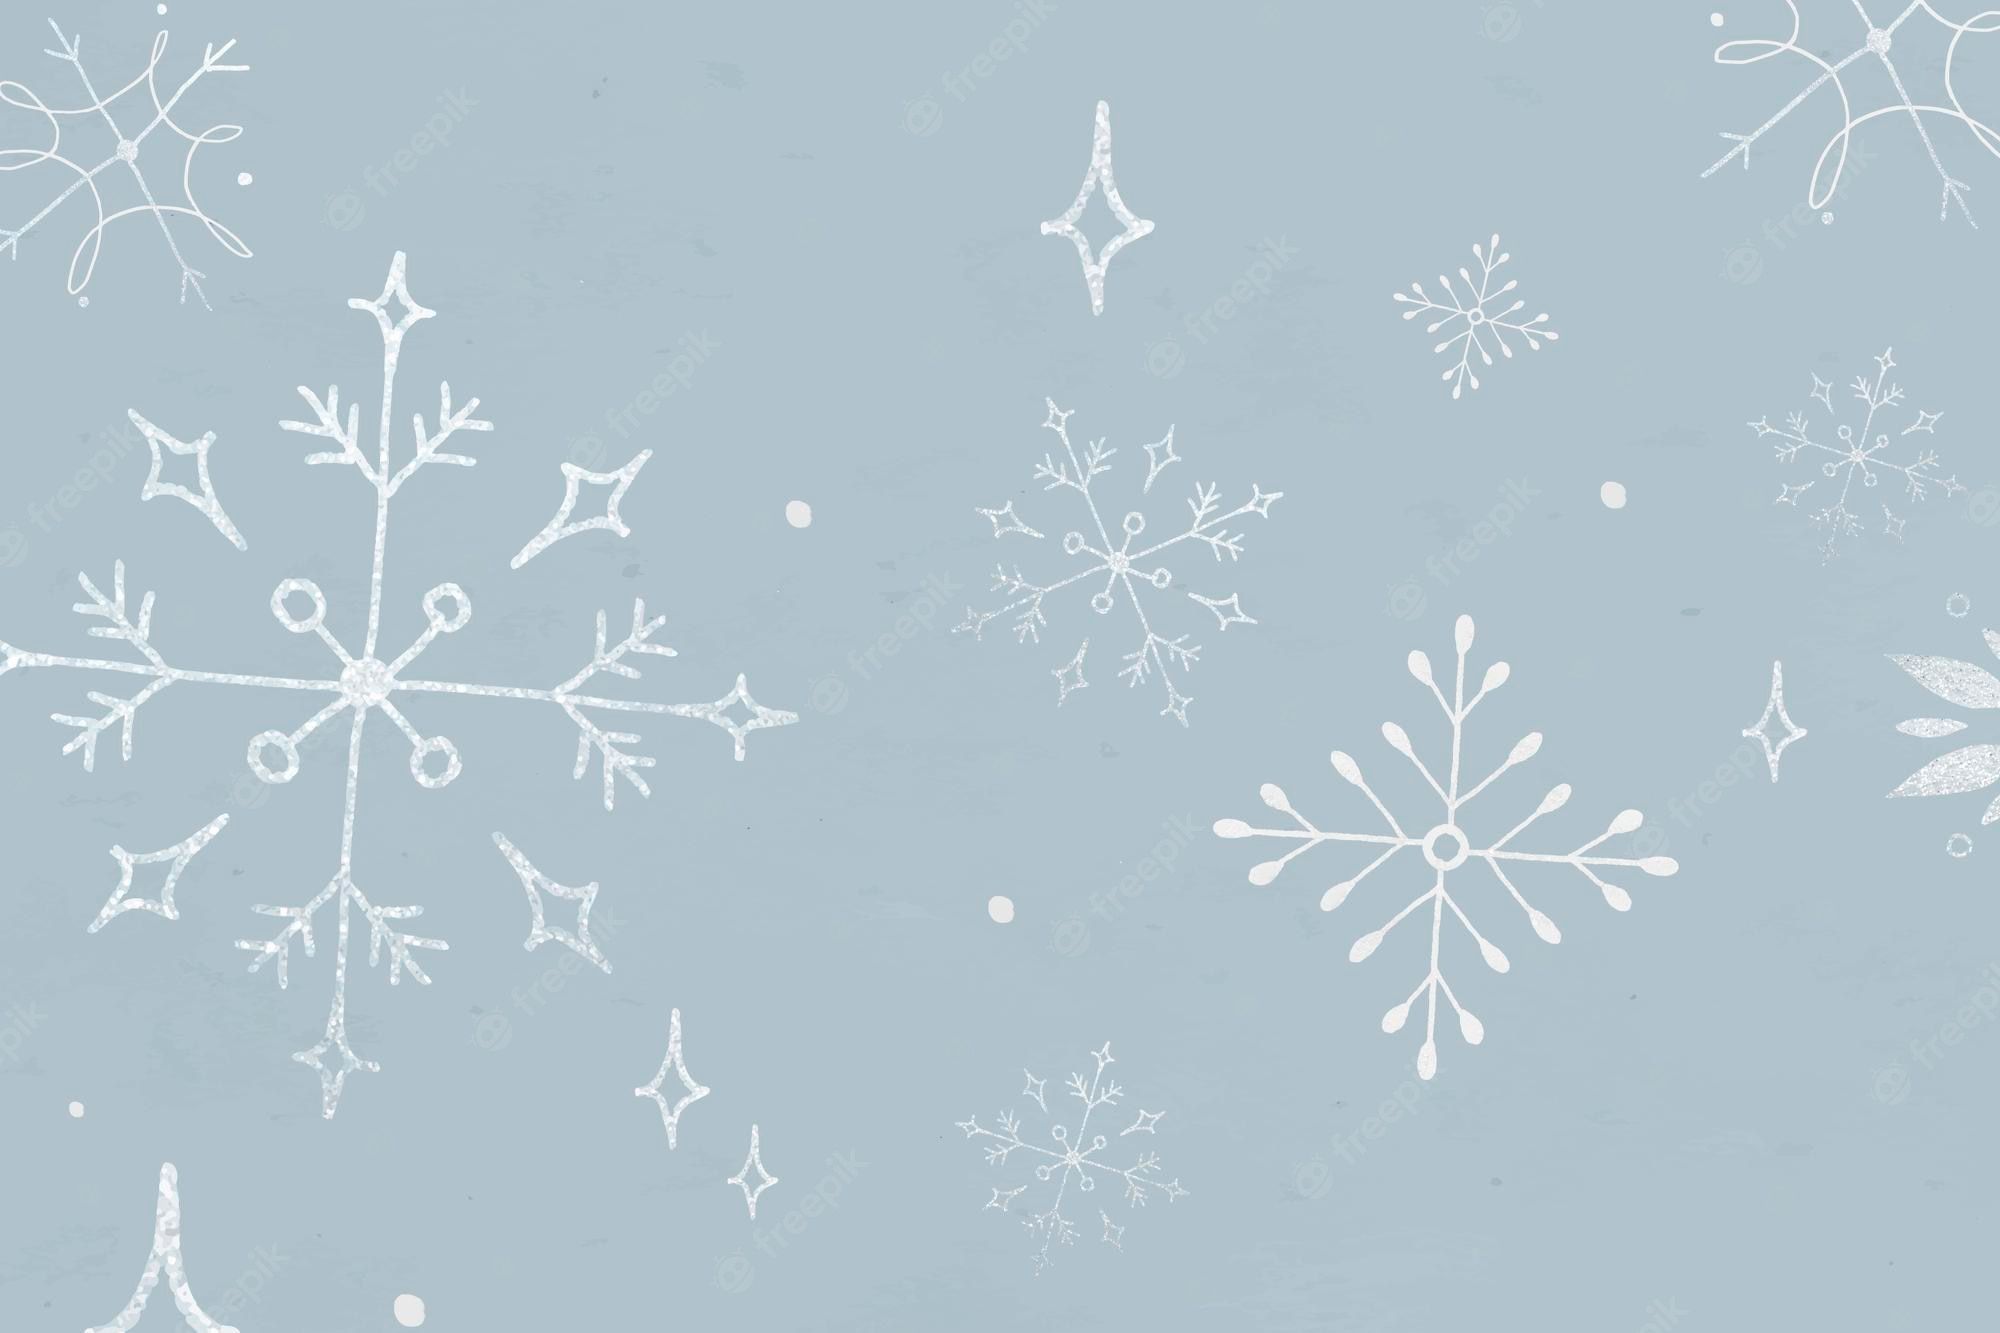 Snowflake Doodle Image